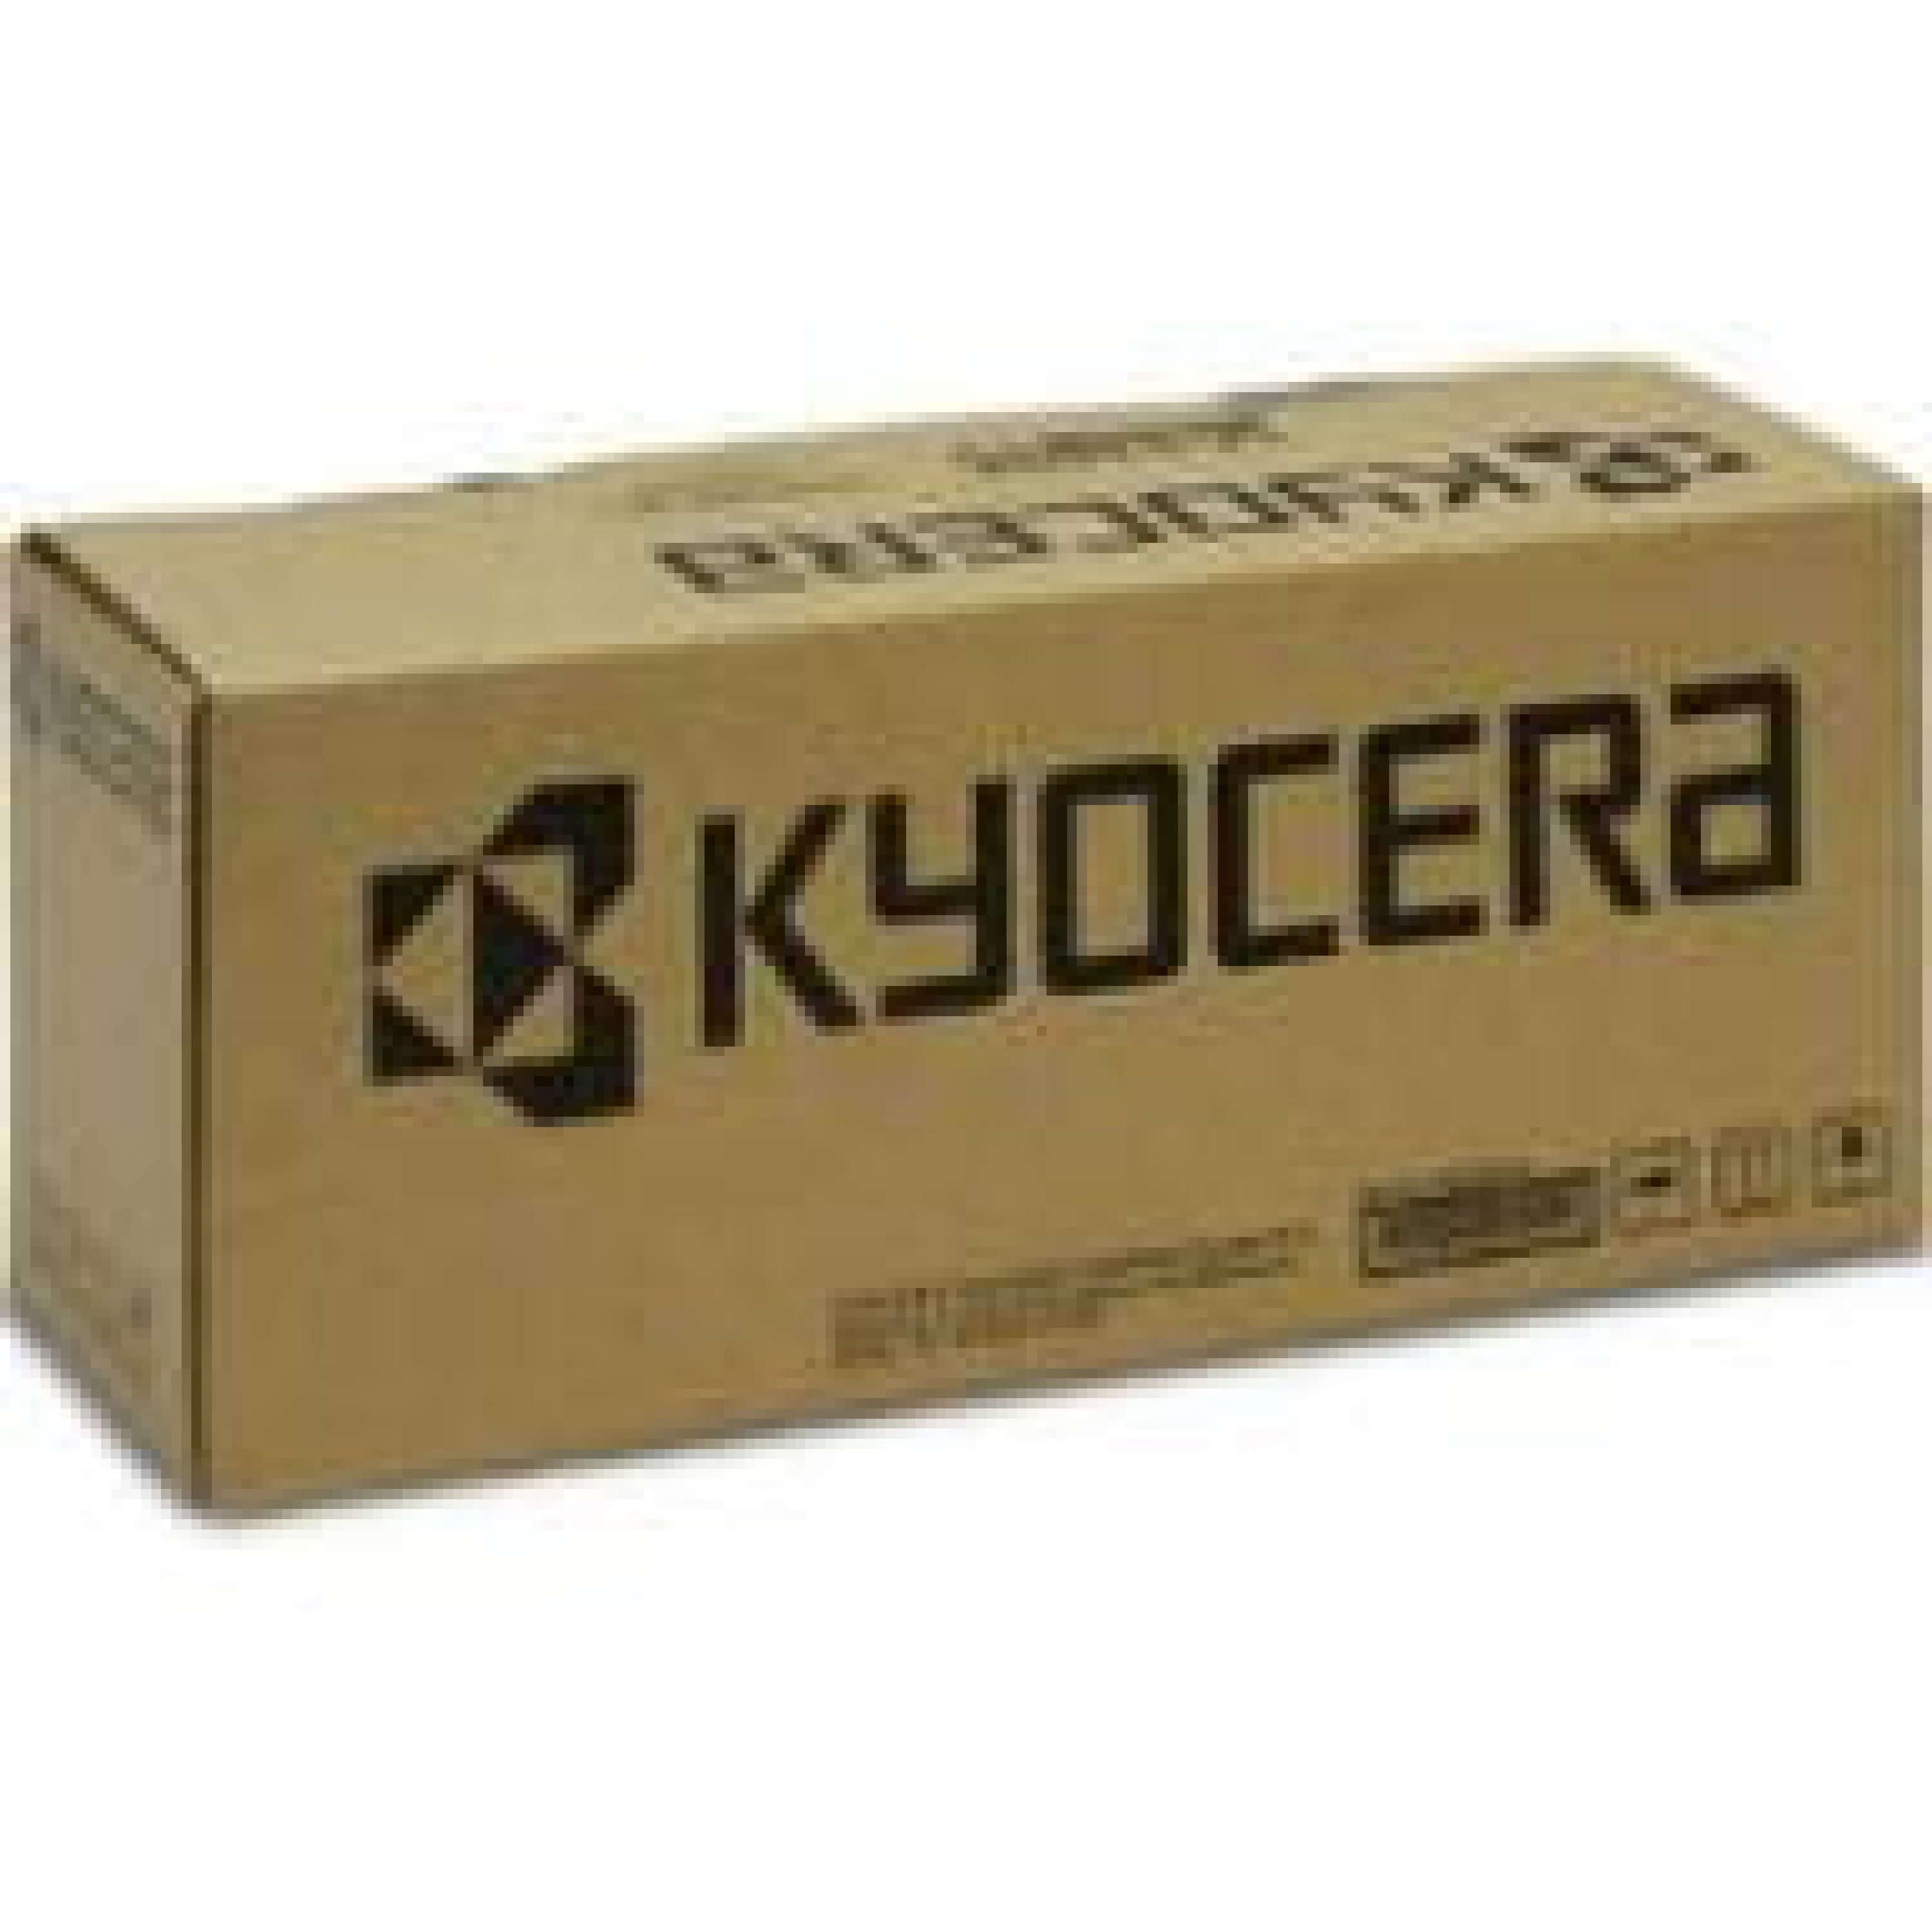 Original Toner Kyocera MA 2100 cwfx (1T0C0ABNL0 / TK-5440M)